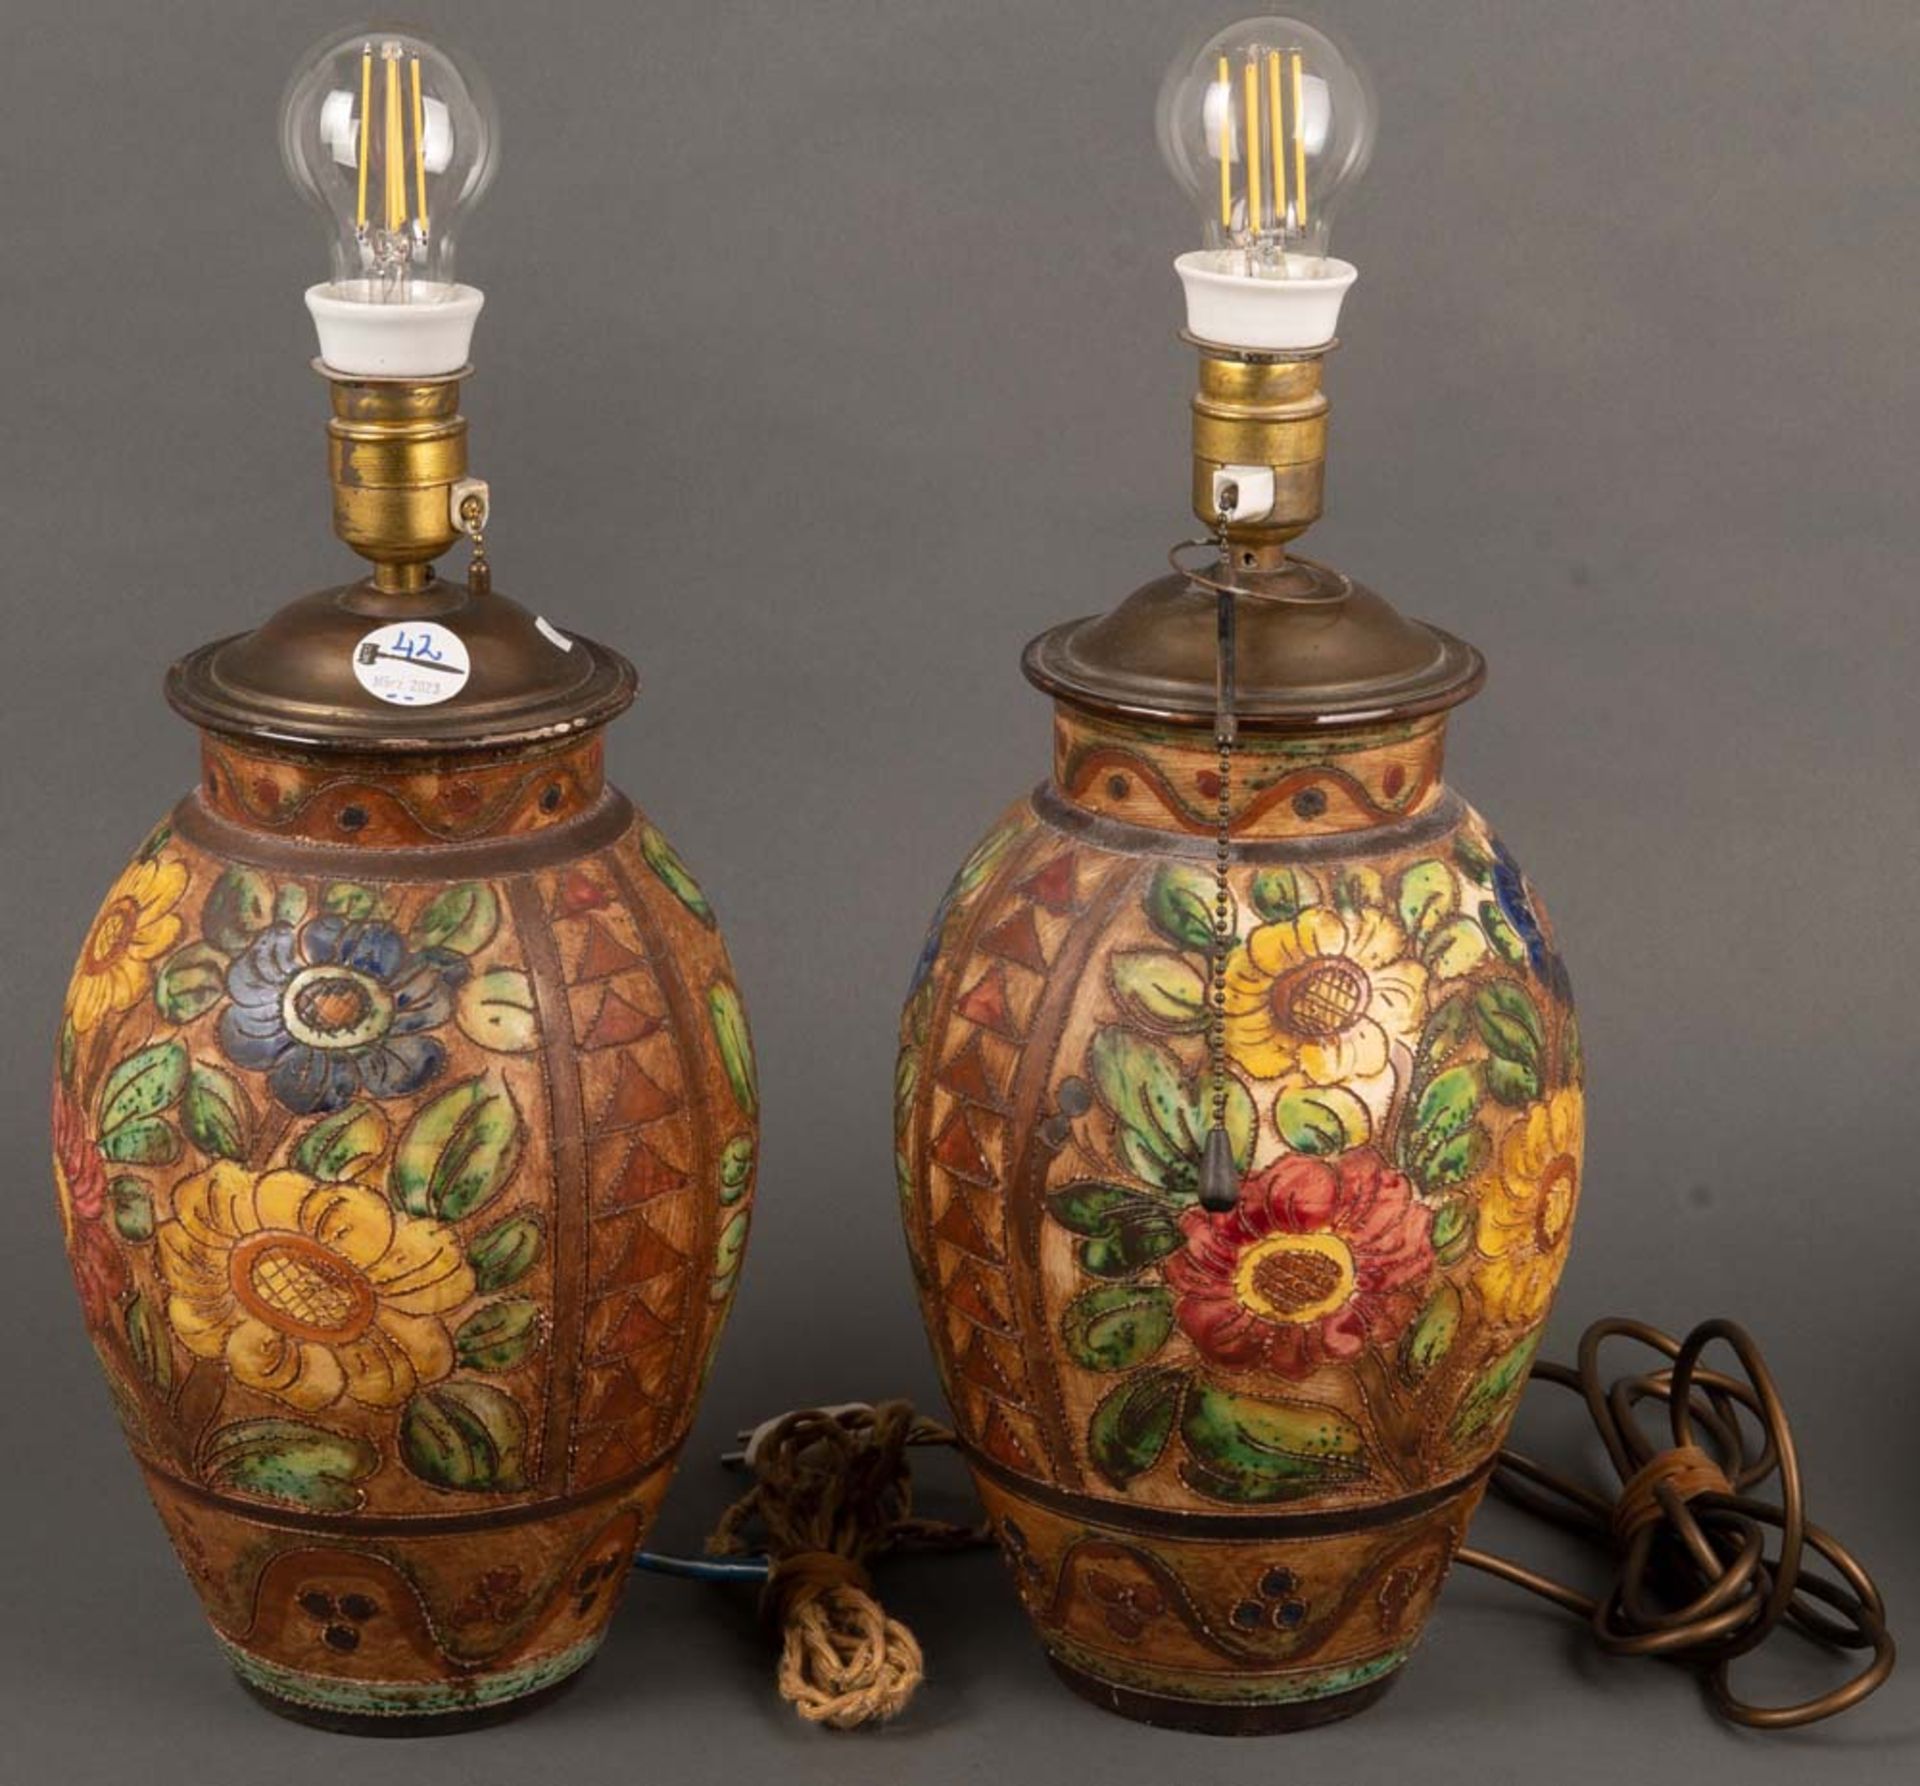 Paar Vasen. Lugano 20. Jh. Keramik, floral geritzt, bunt bemalt, am Boden gemarkt, zu Lampen